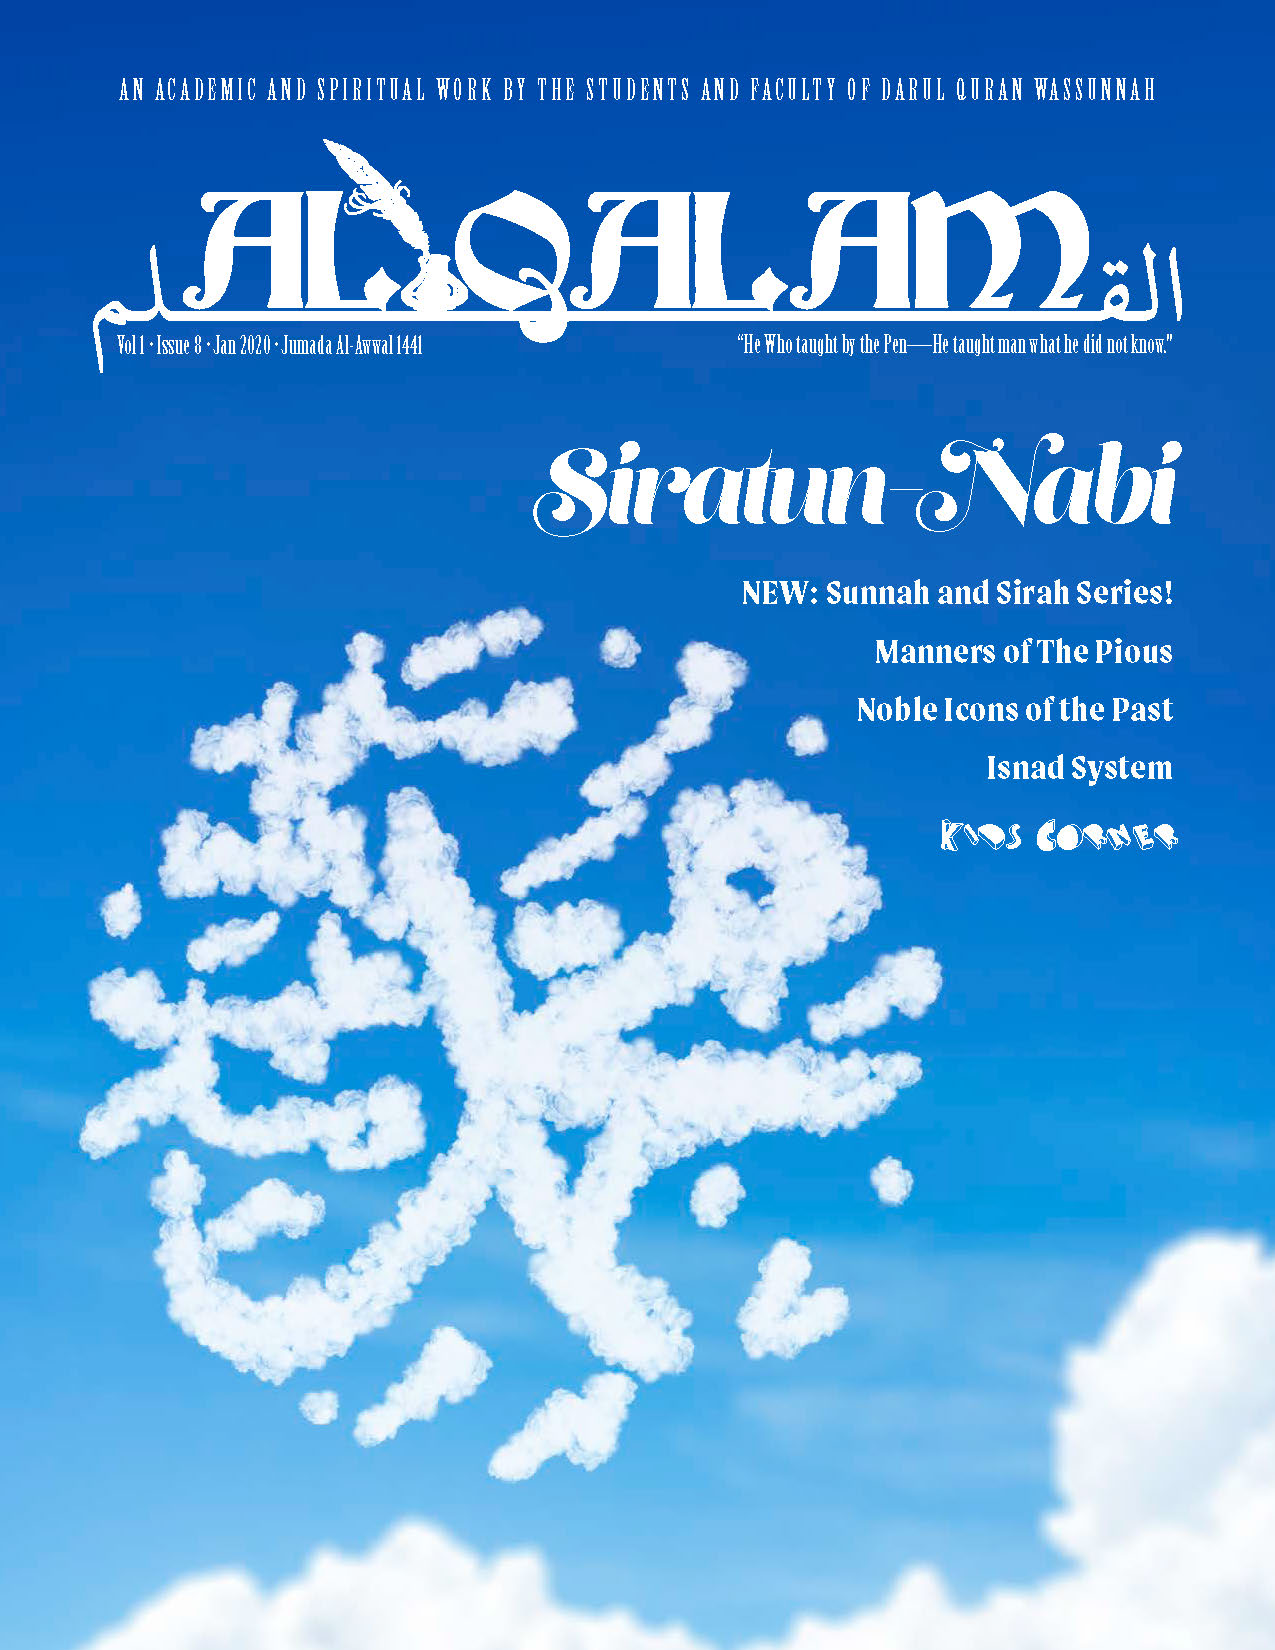 Al Qalam - Issue 7